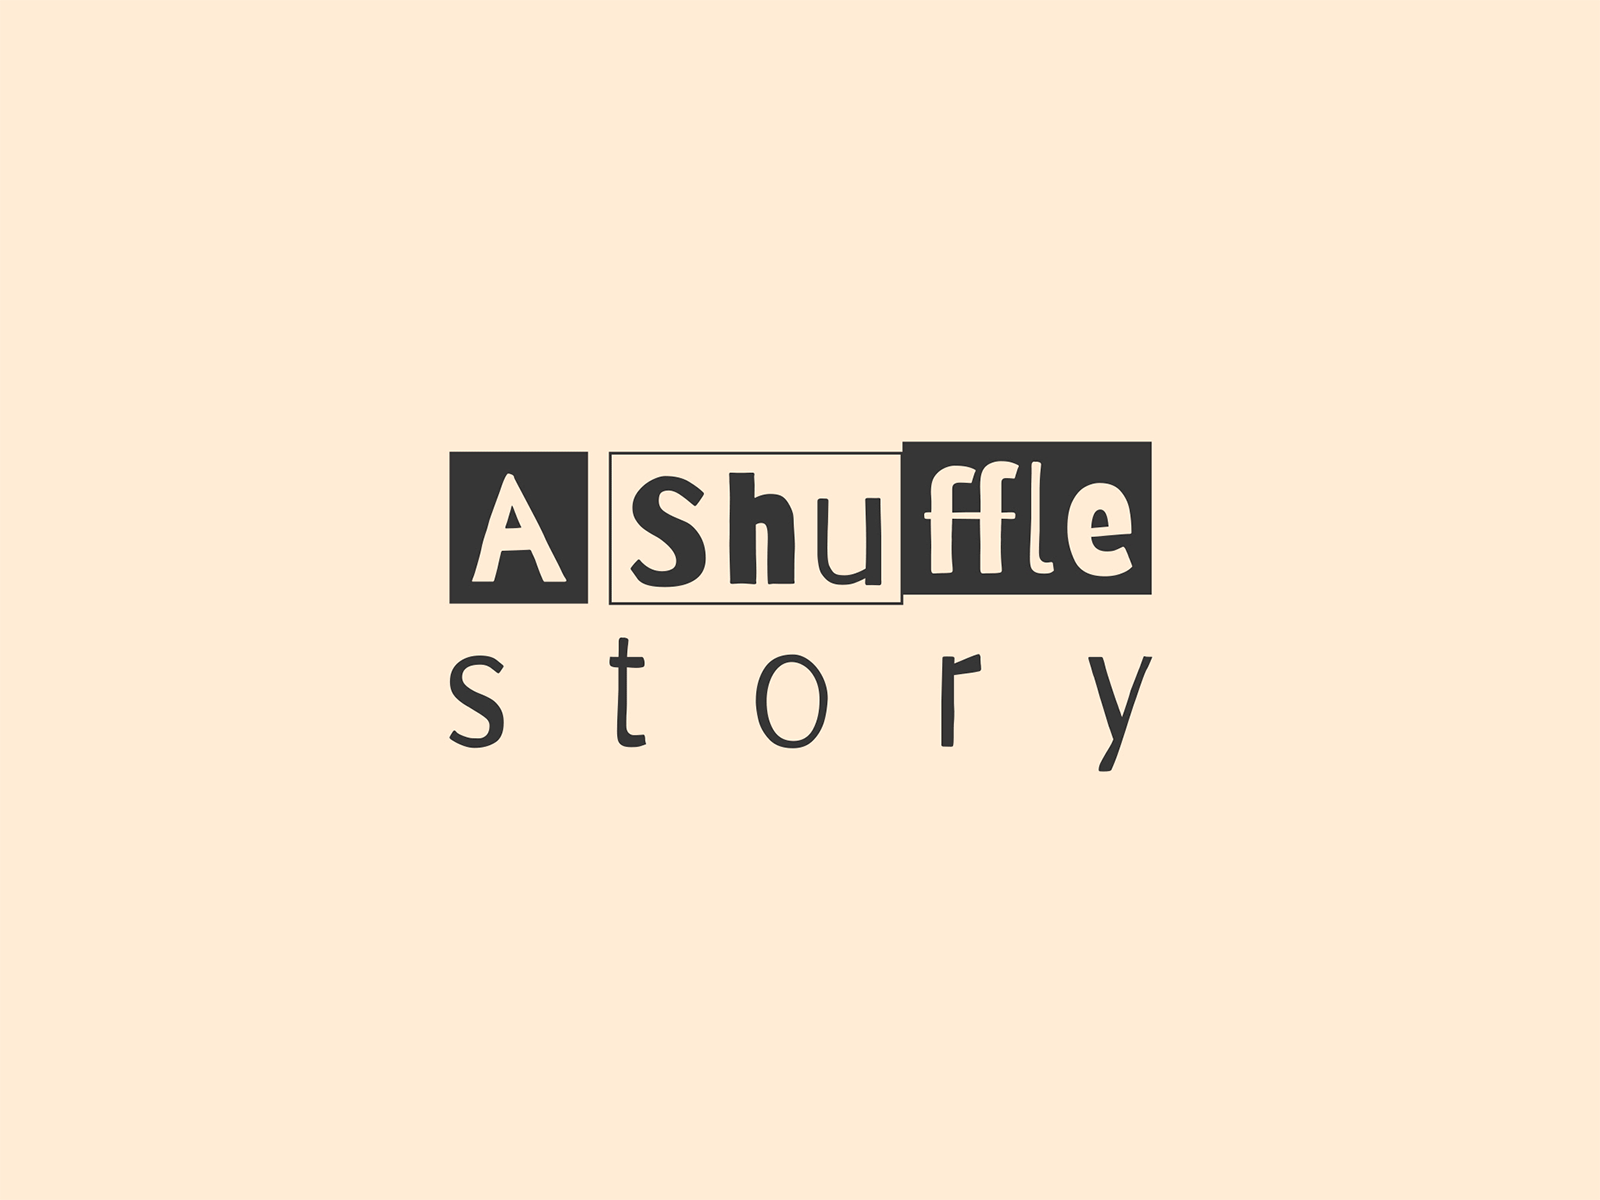 "A shuffle story"